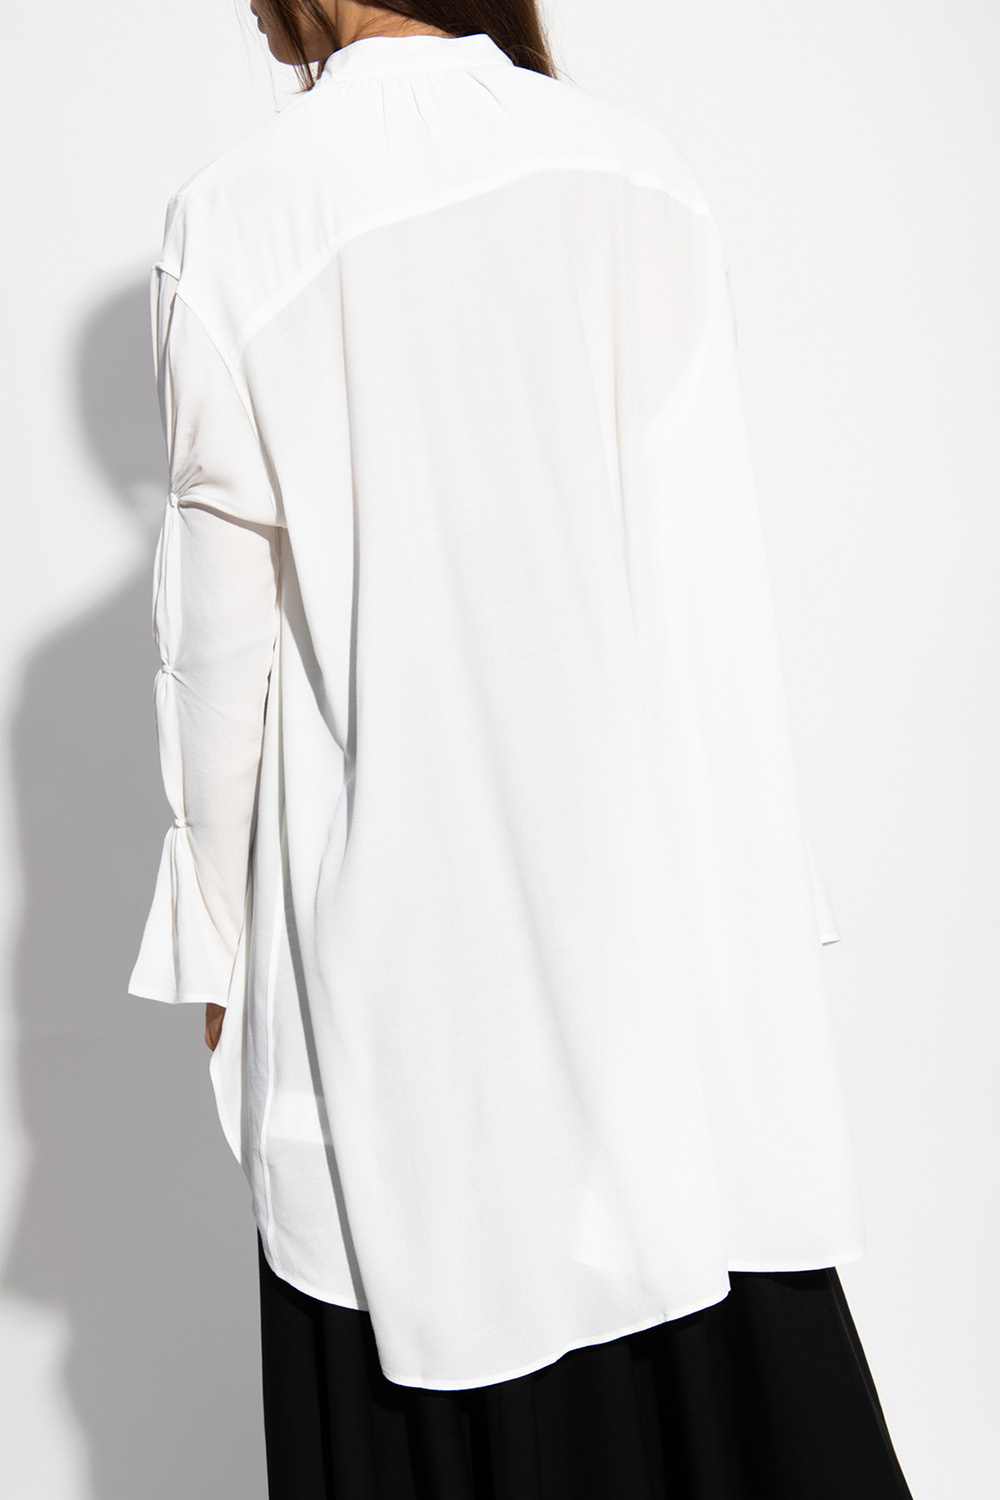 Vivienne Westwood Asymmetrical dkny shirt